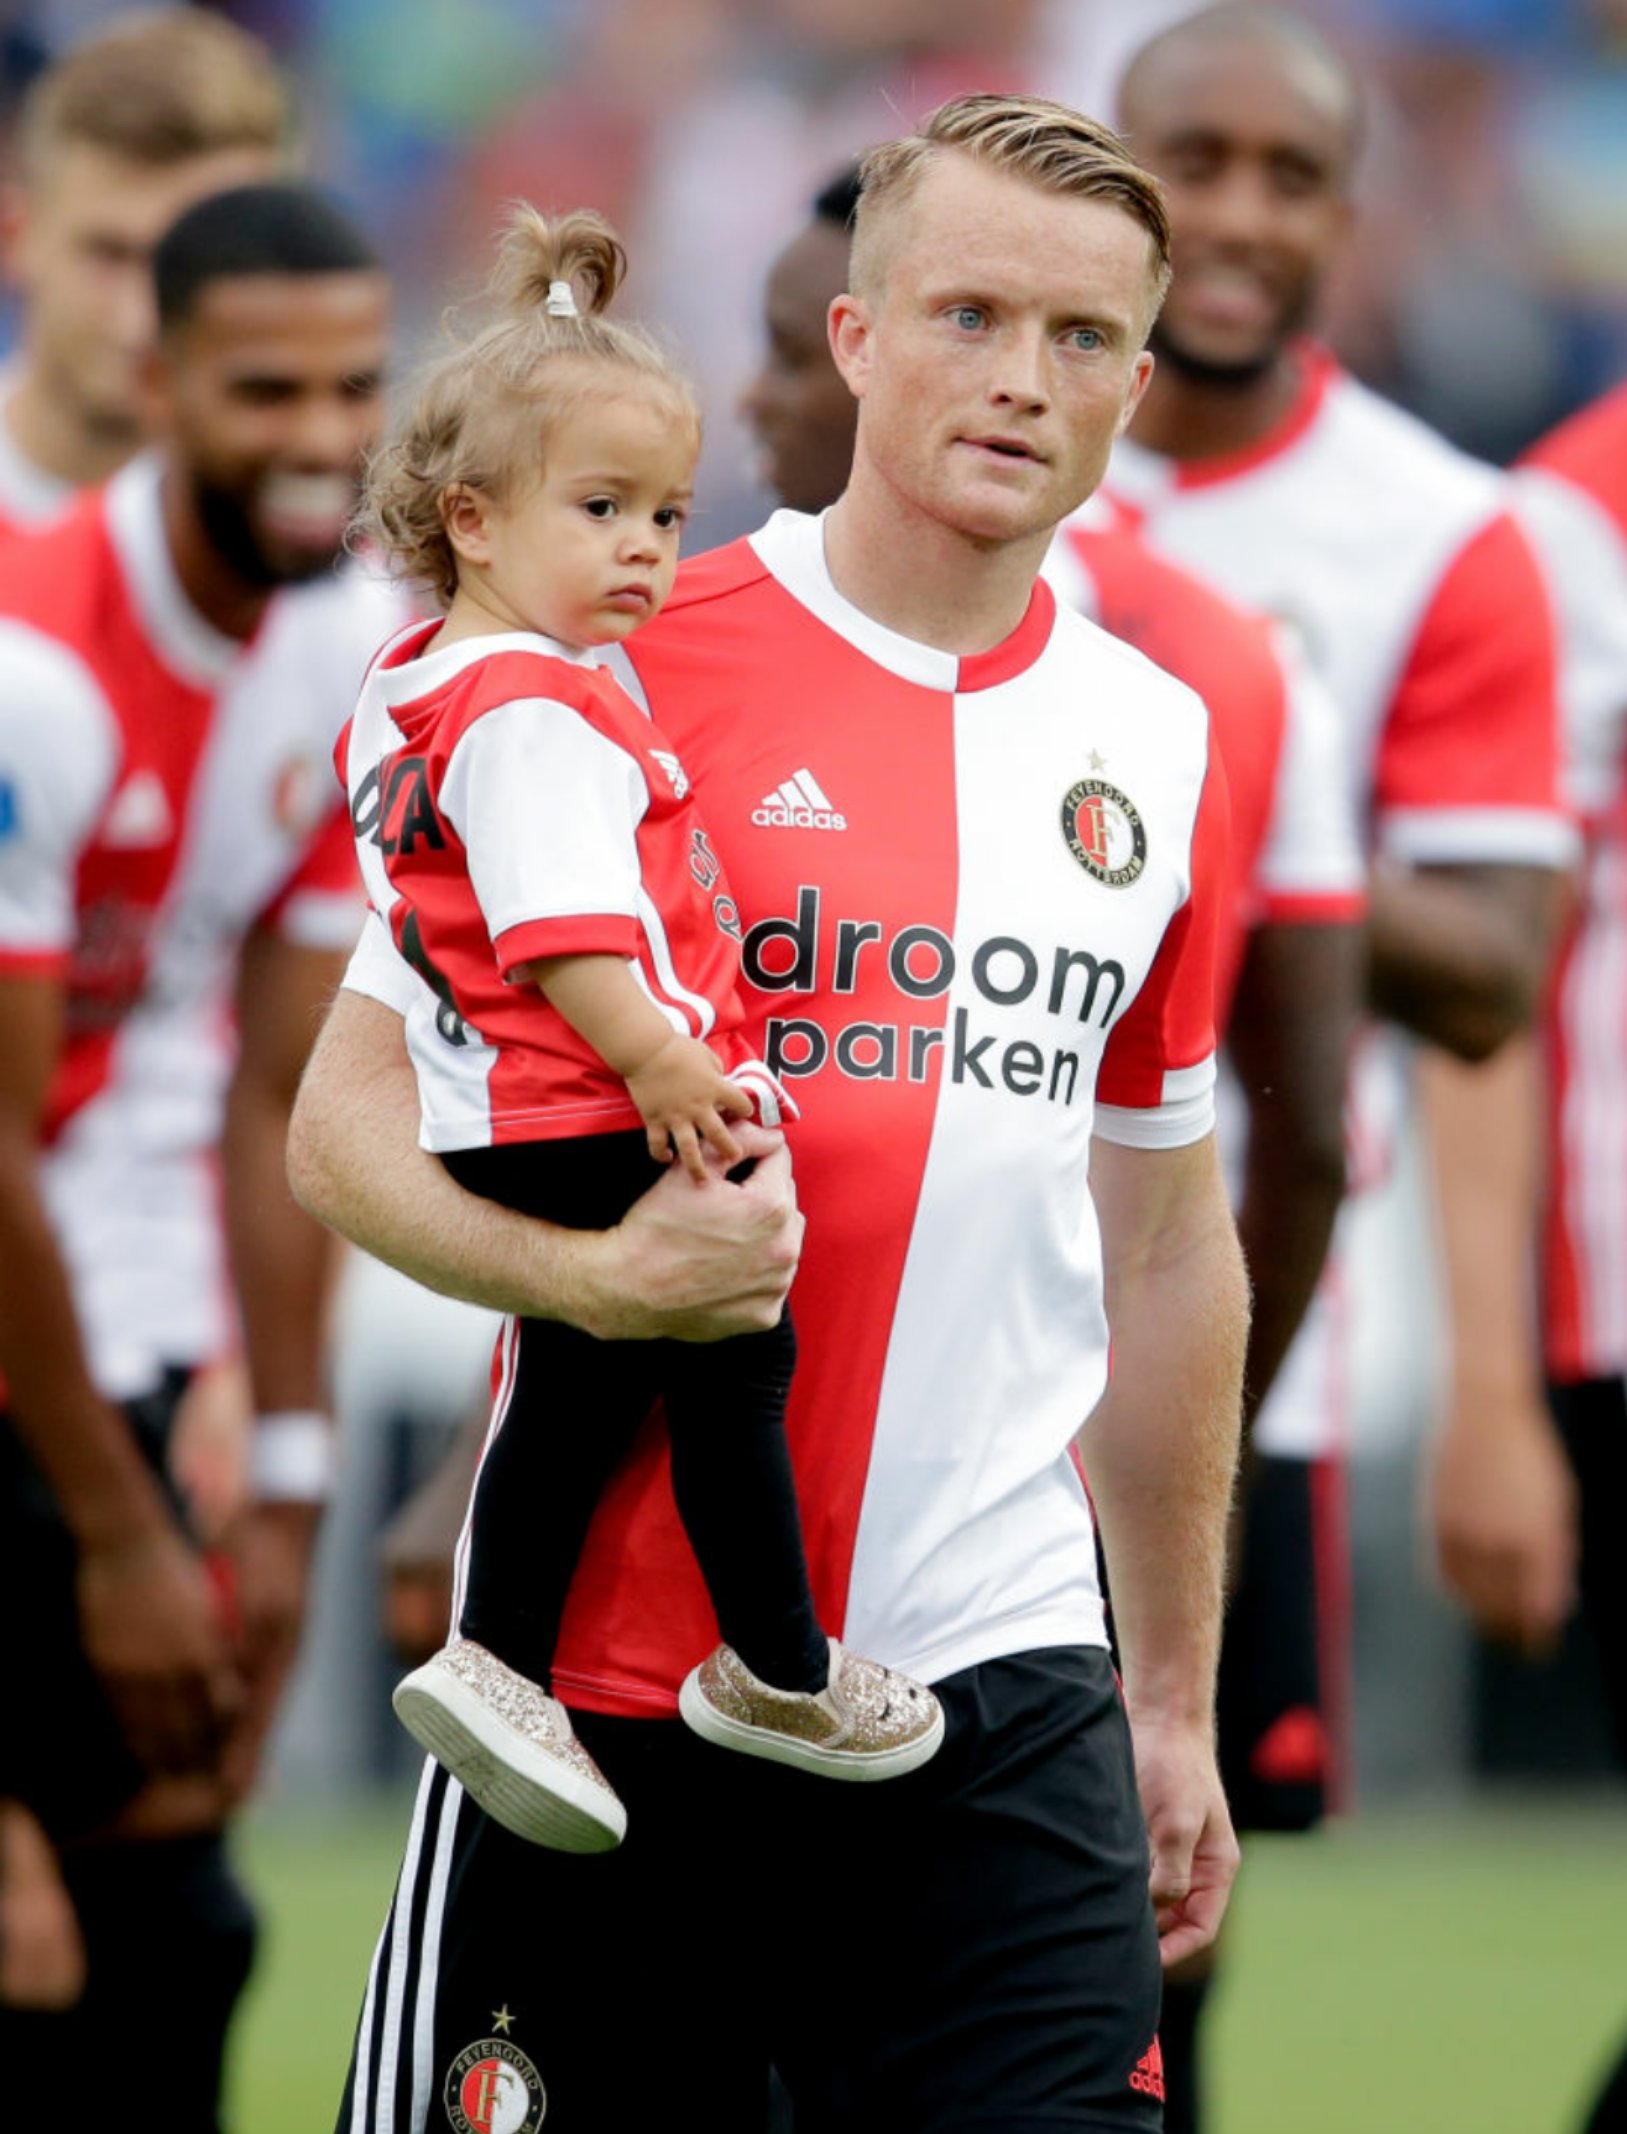 Sam LARSSON - 2017/18 Champions League. - Feyenoord